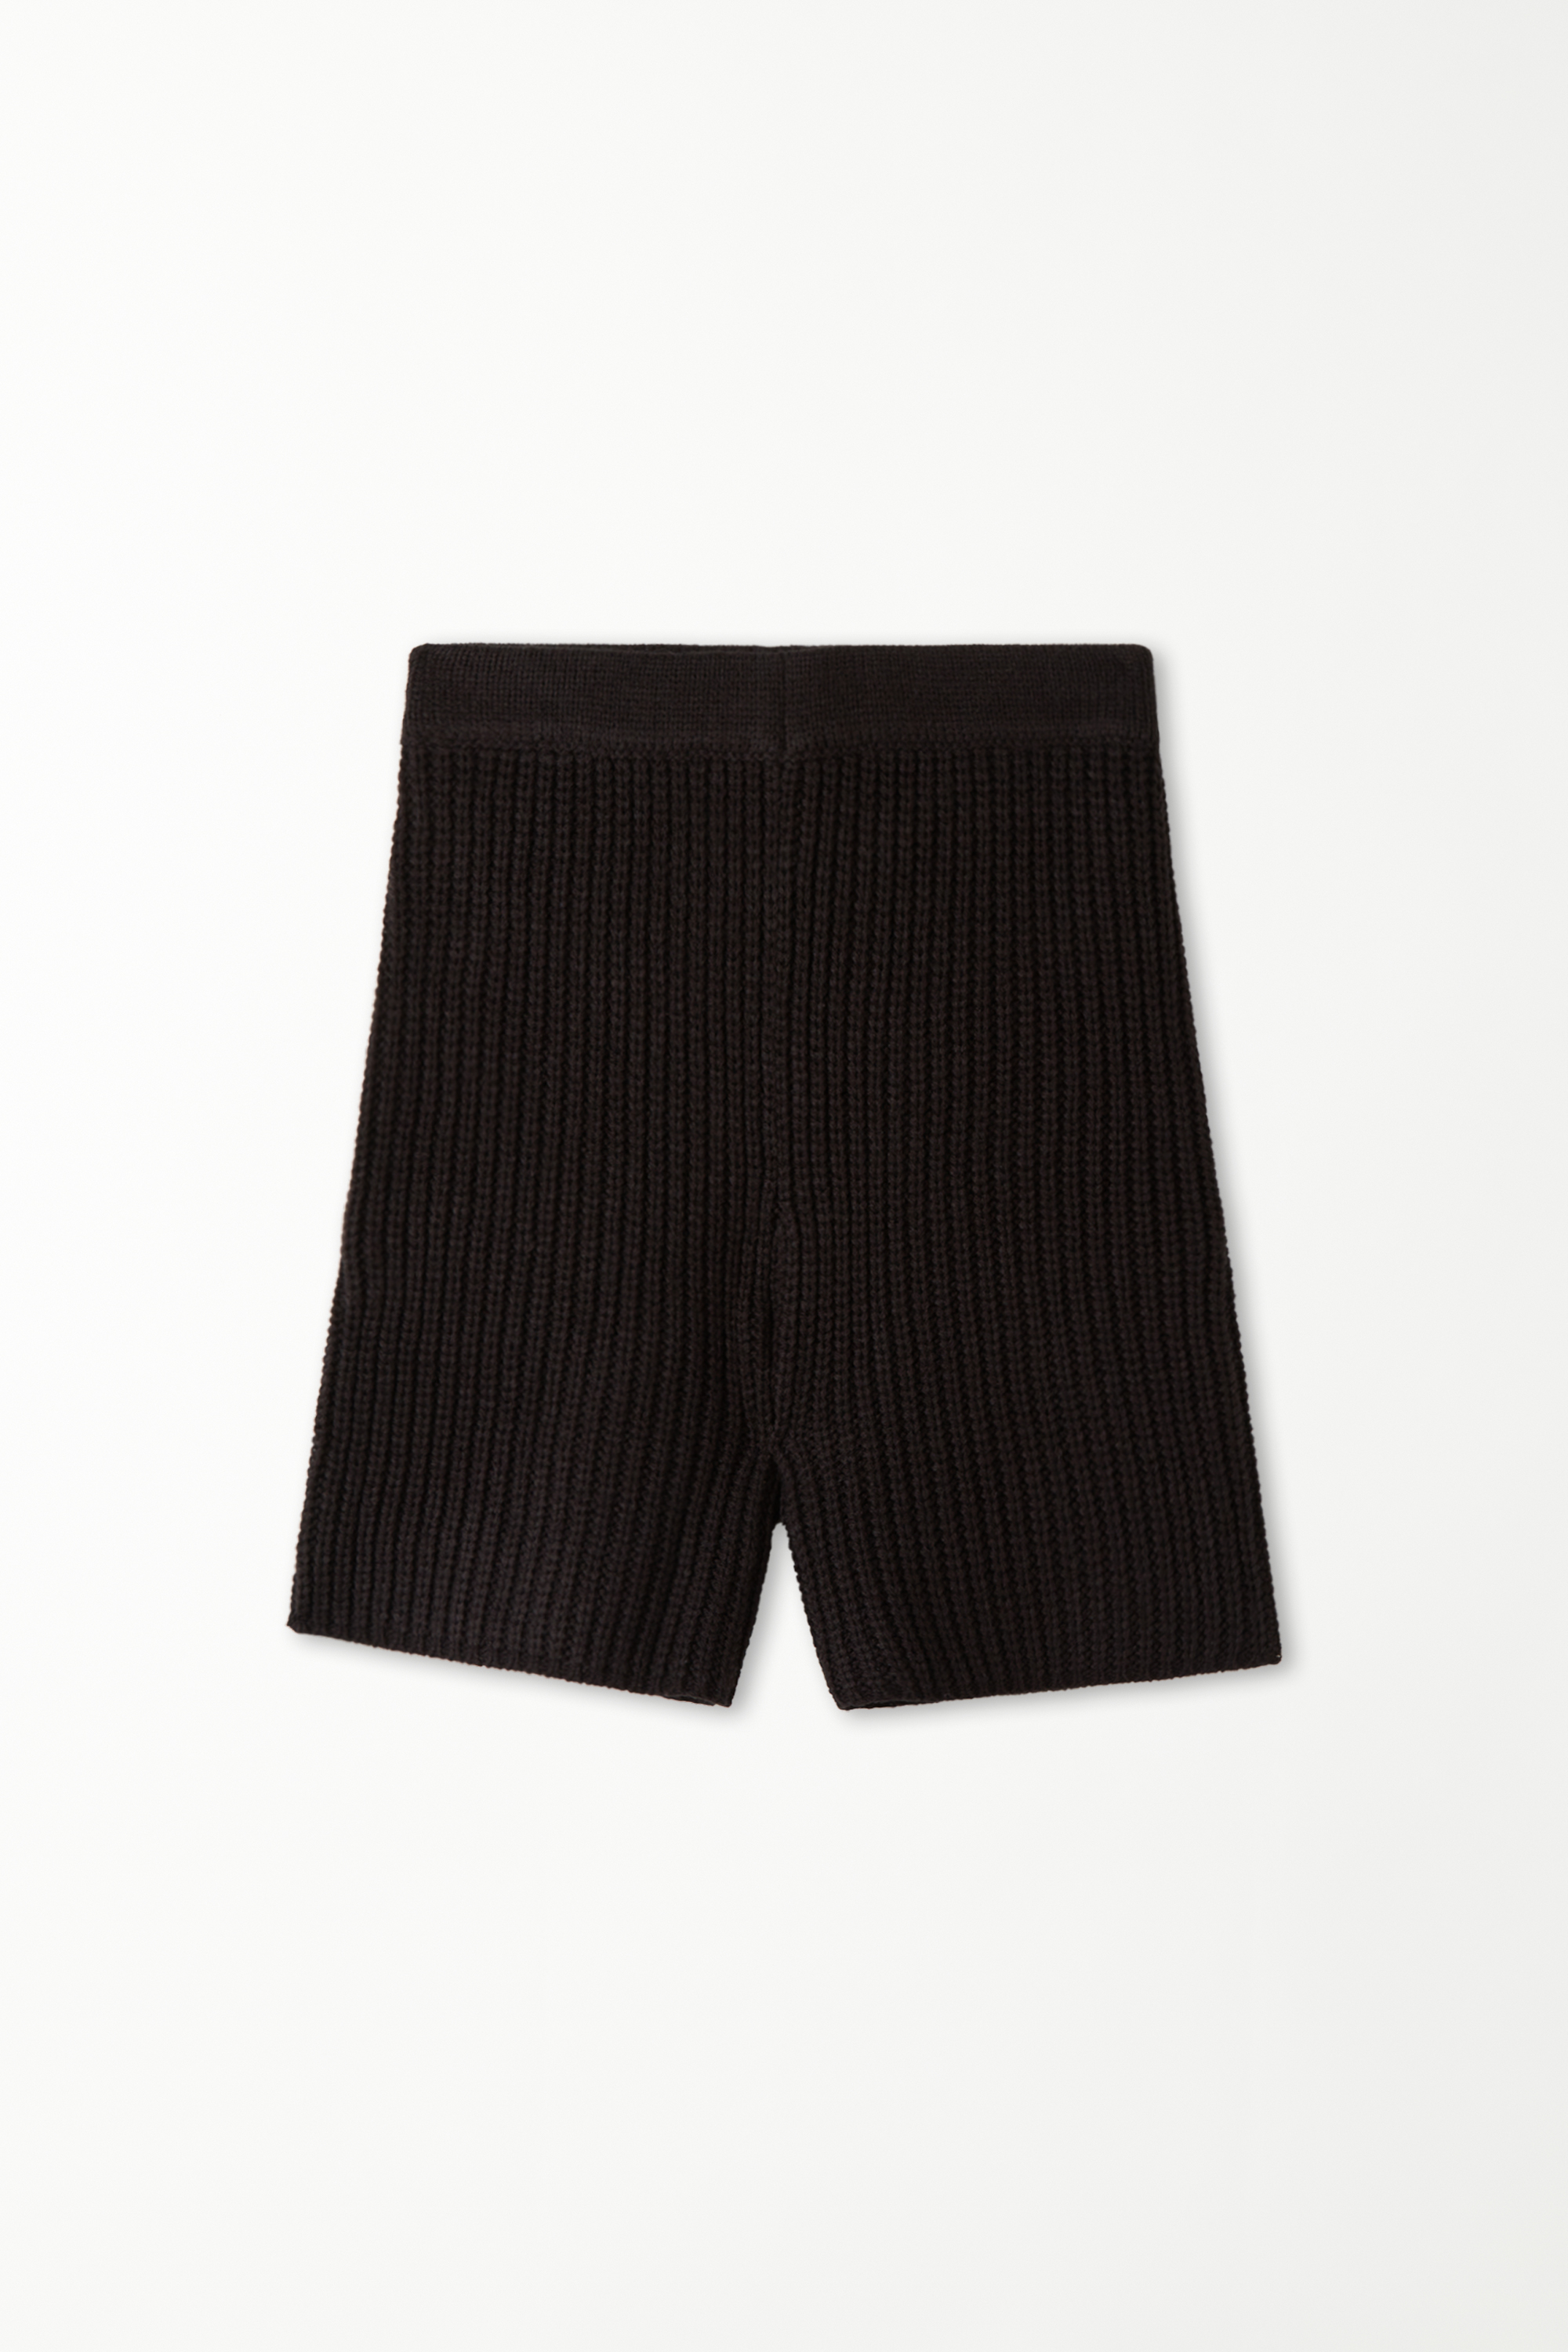 Fully-Fashioned Ribbed Fabric Biker Shorts